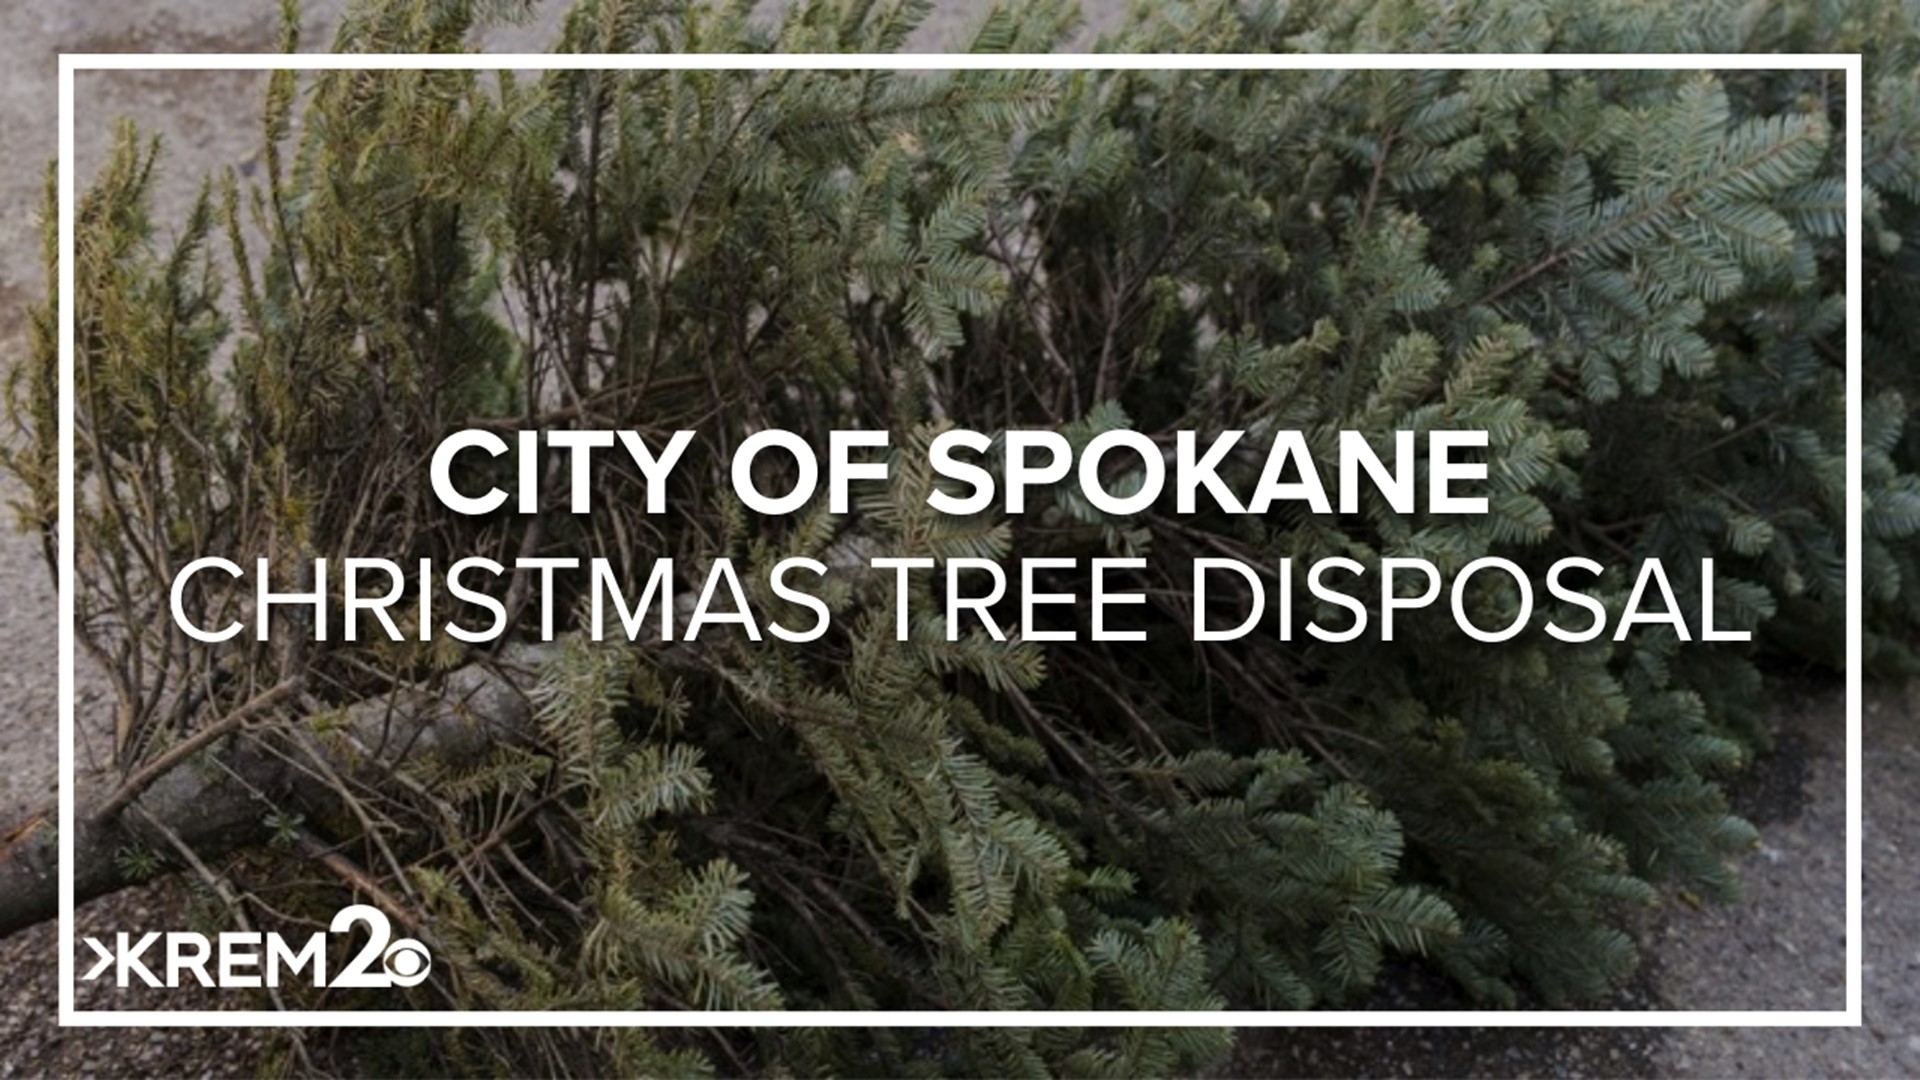 Free curbside Christmas tree disposal in Spokane